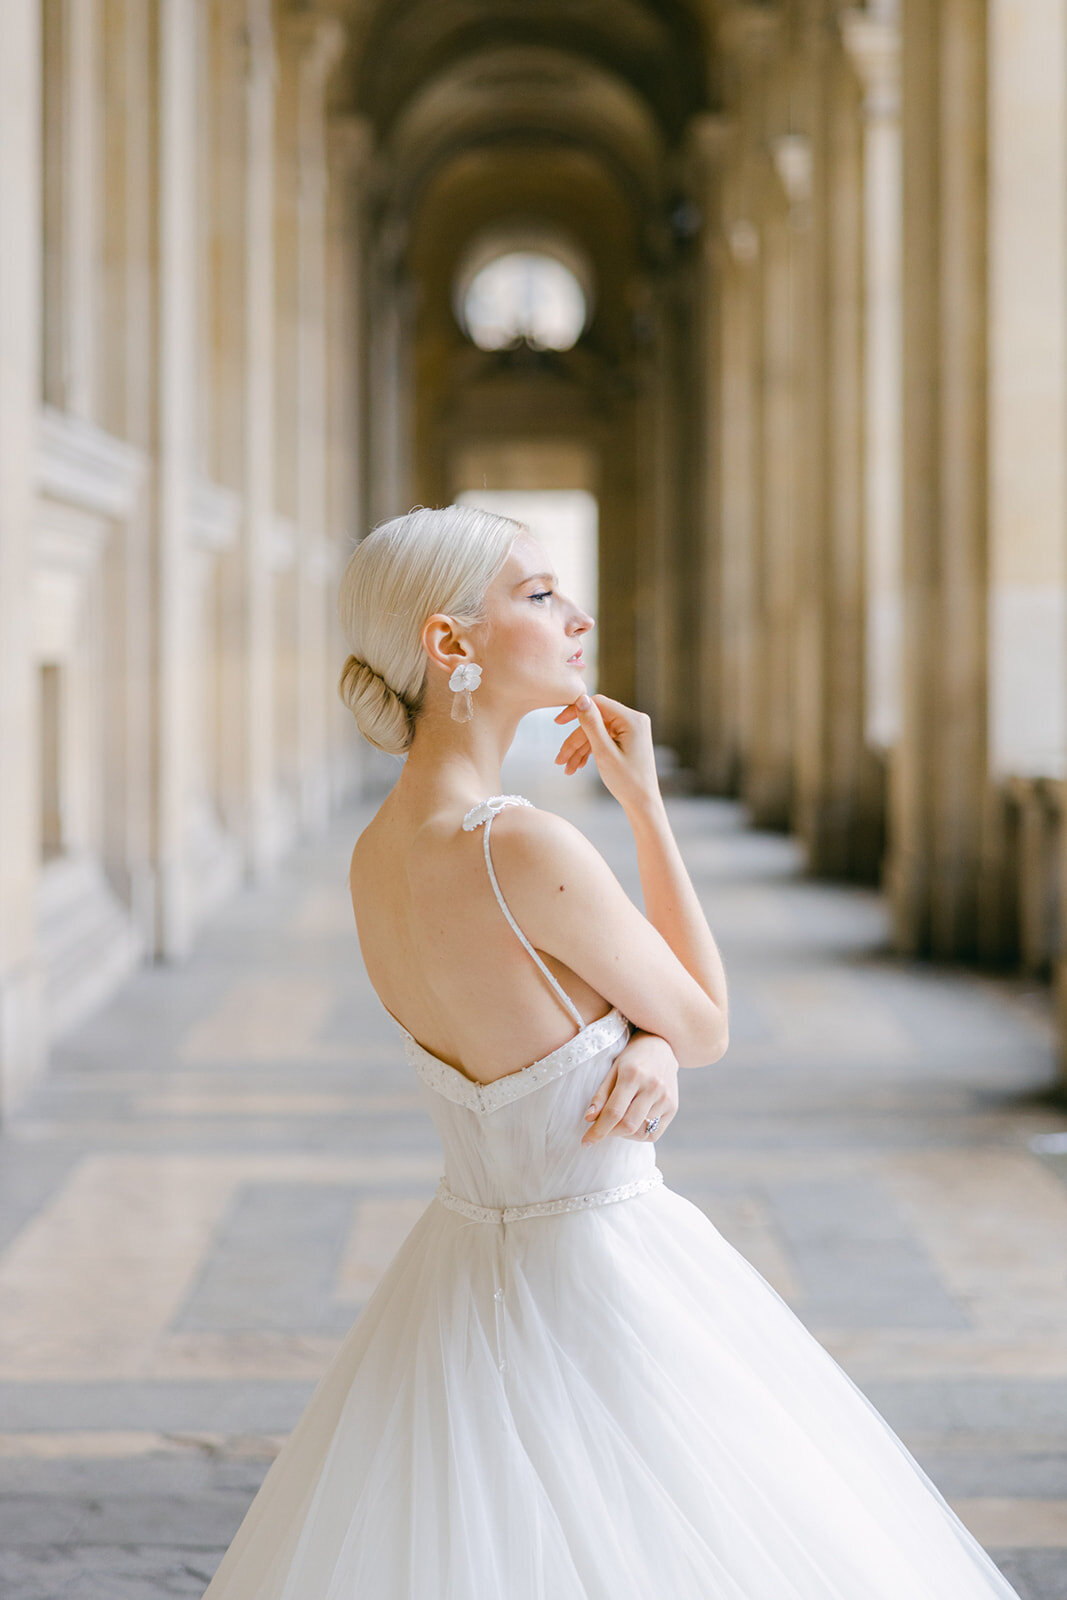 Dylan-Pariety-Couture-Paris-Engagement-Pre-Wedding-Larisa-Shorina-Destination-Photography-12